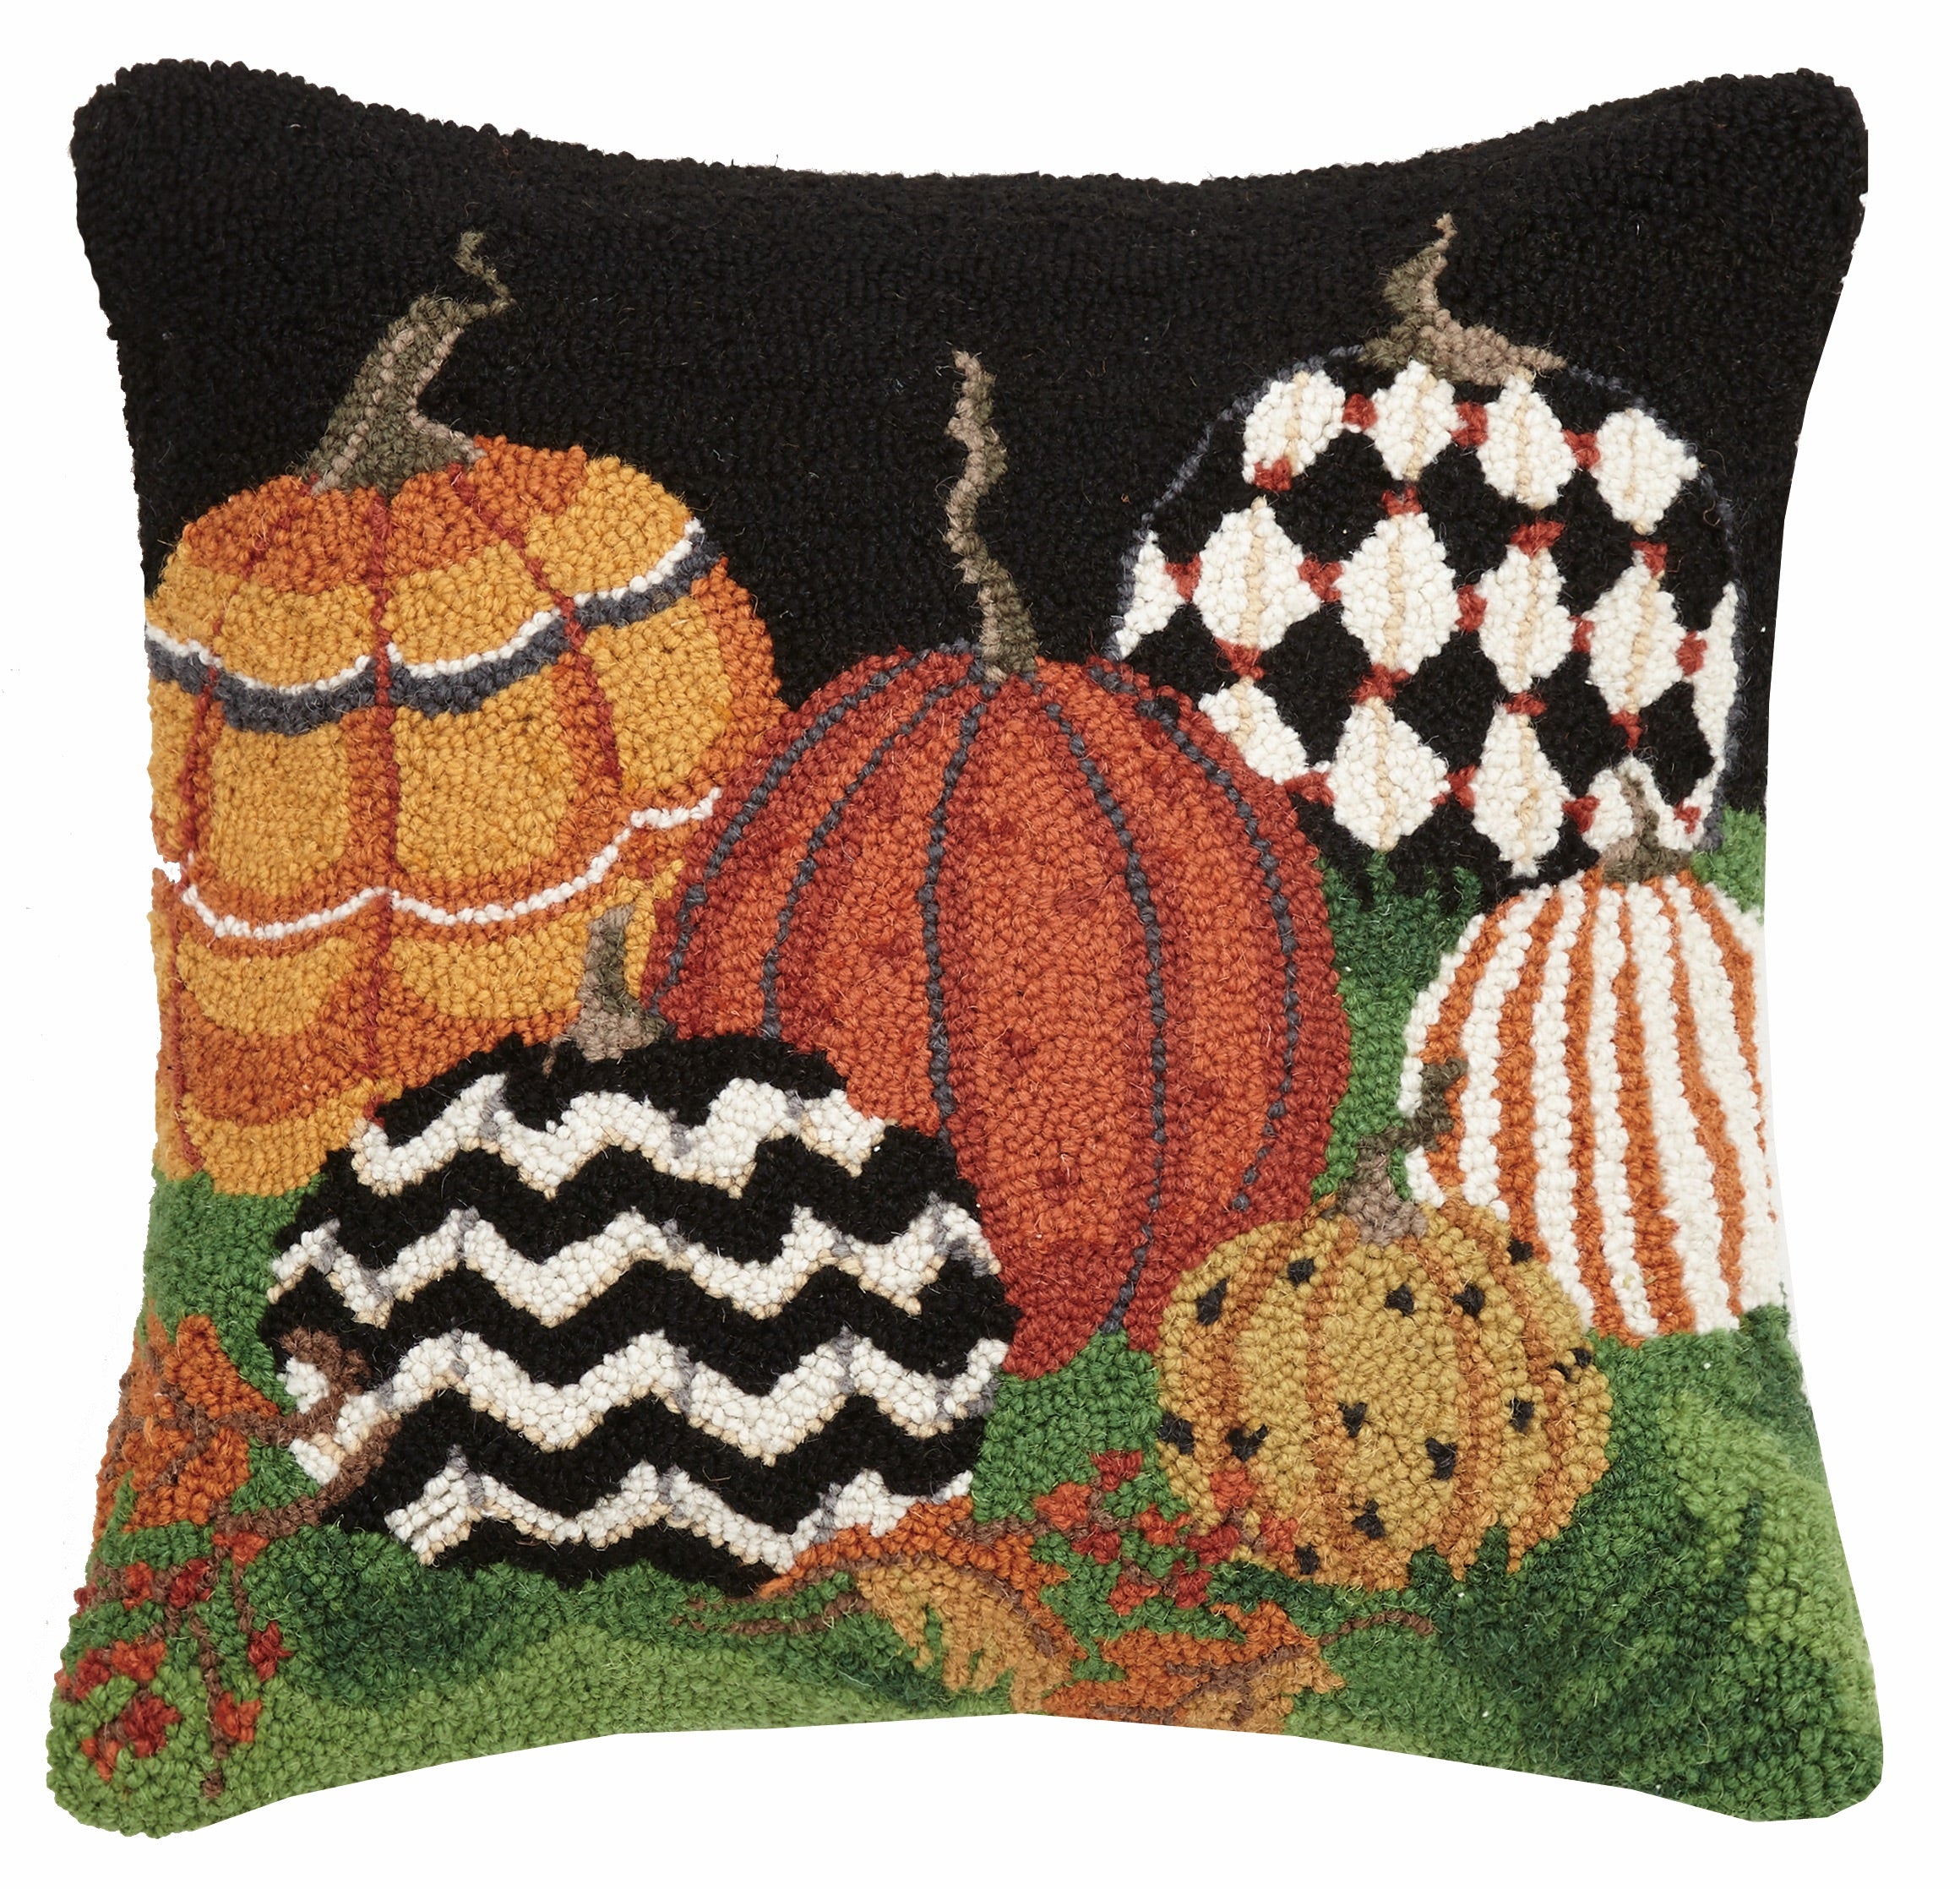 Patterned Pumpkins Pillow, Hooked Wool